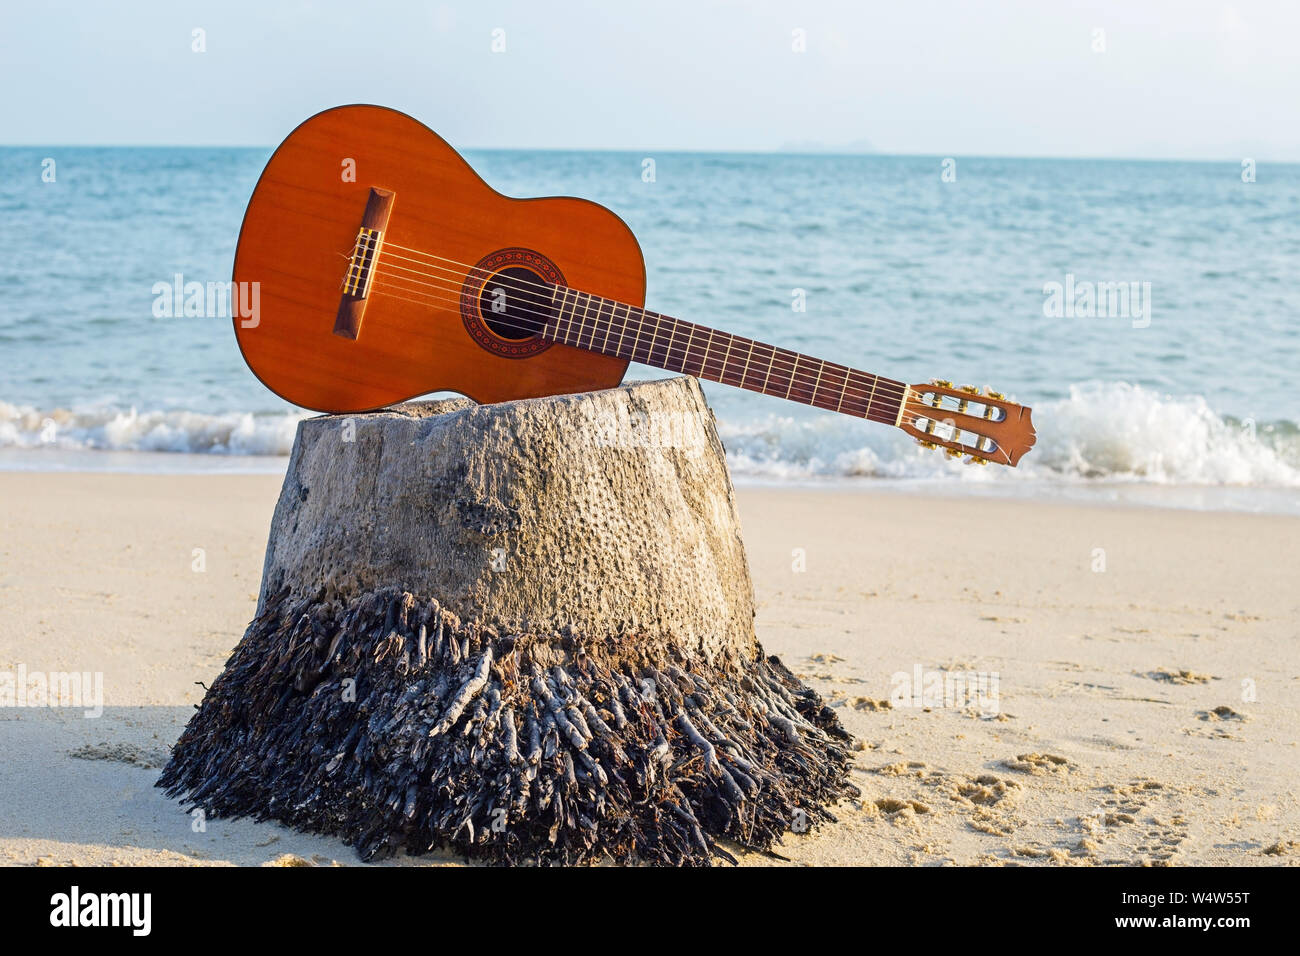 Gitarre auf Sand Strand im Meer Sommer Stockfotografie - Alamy